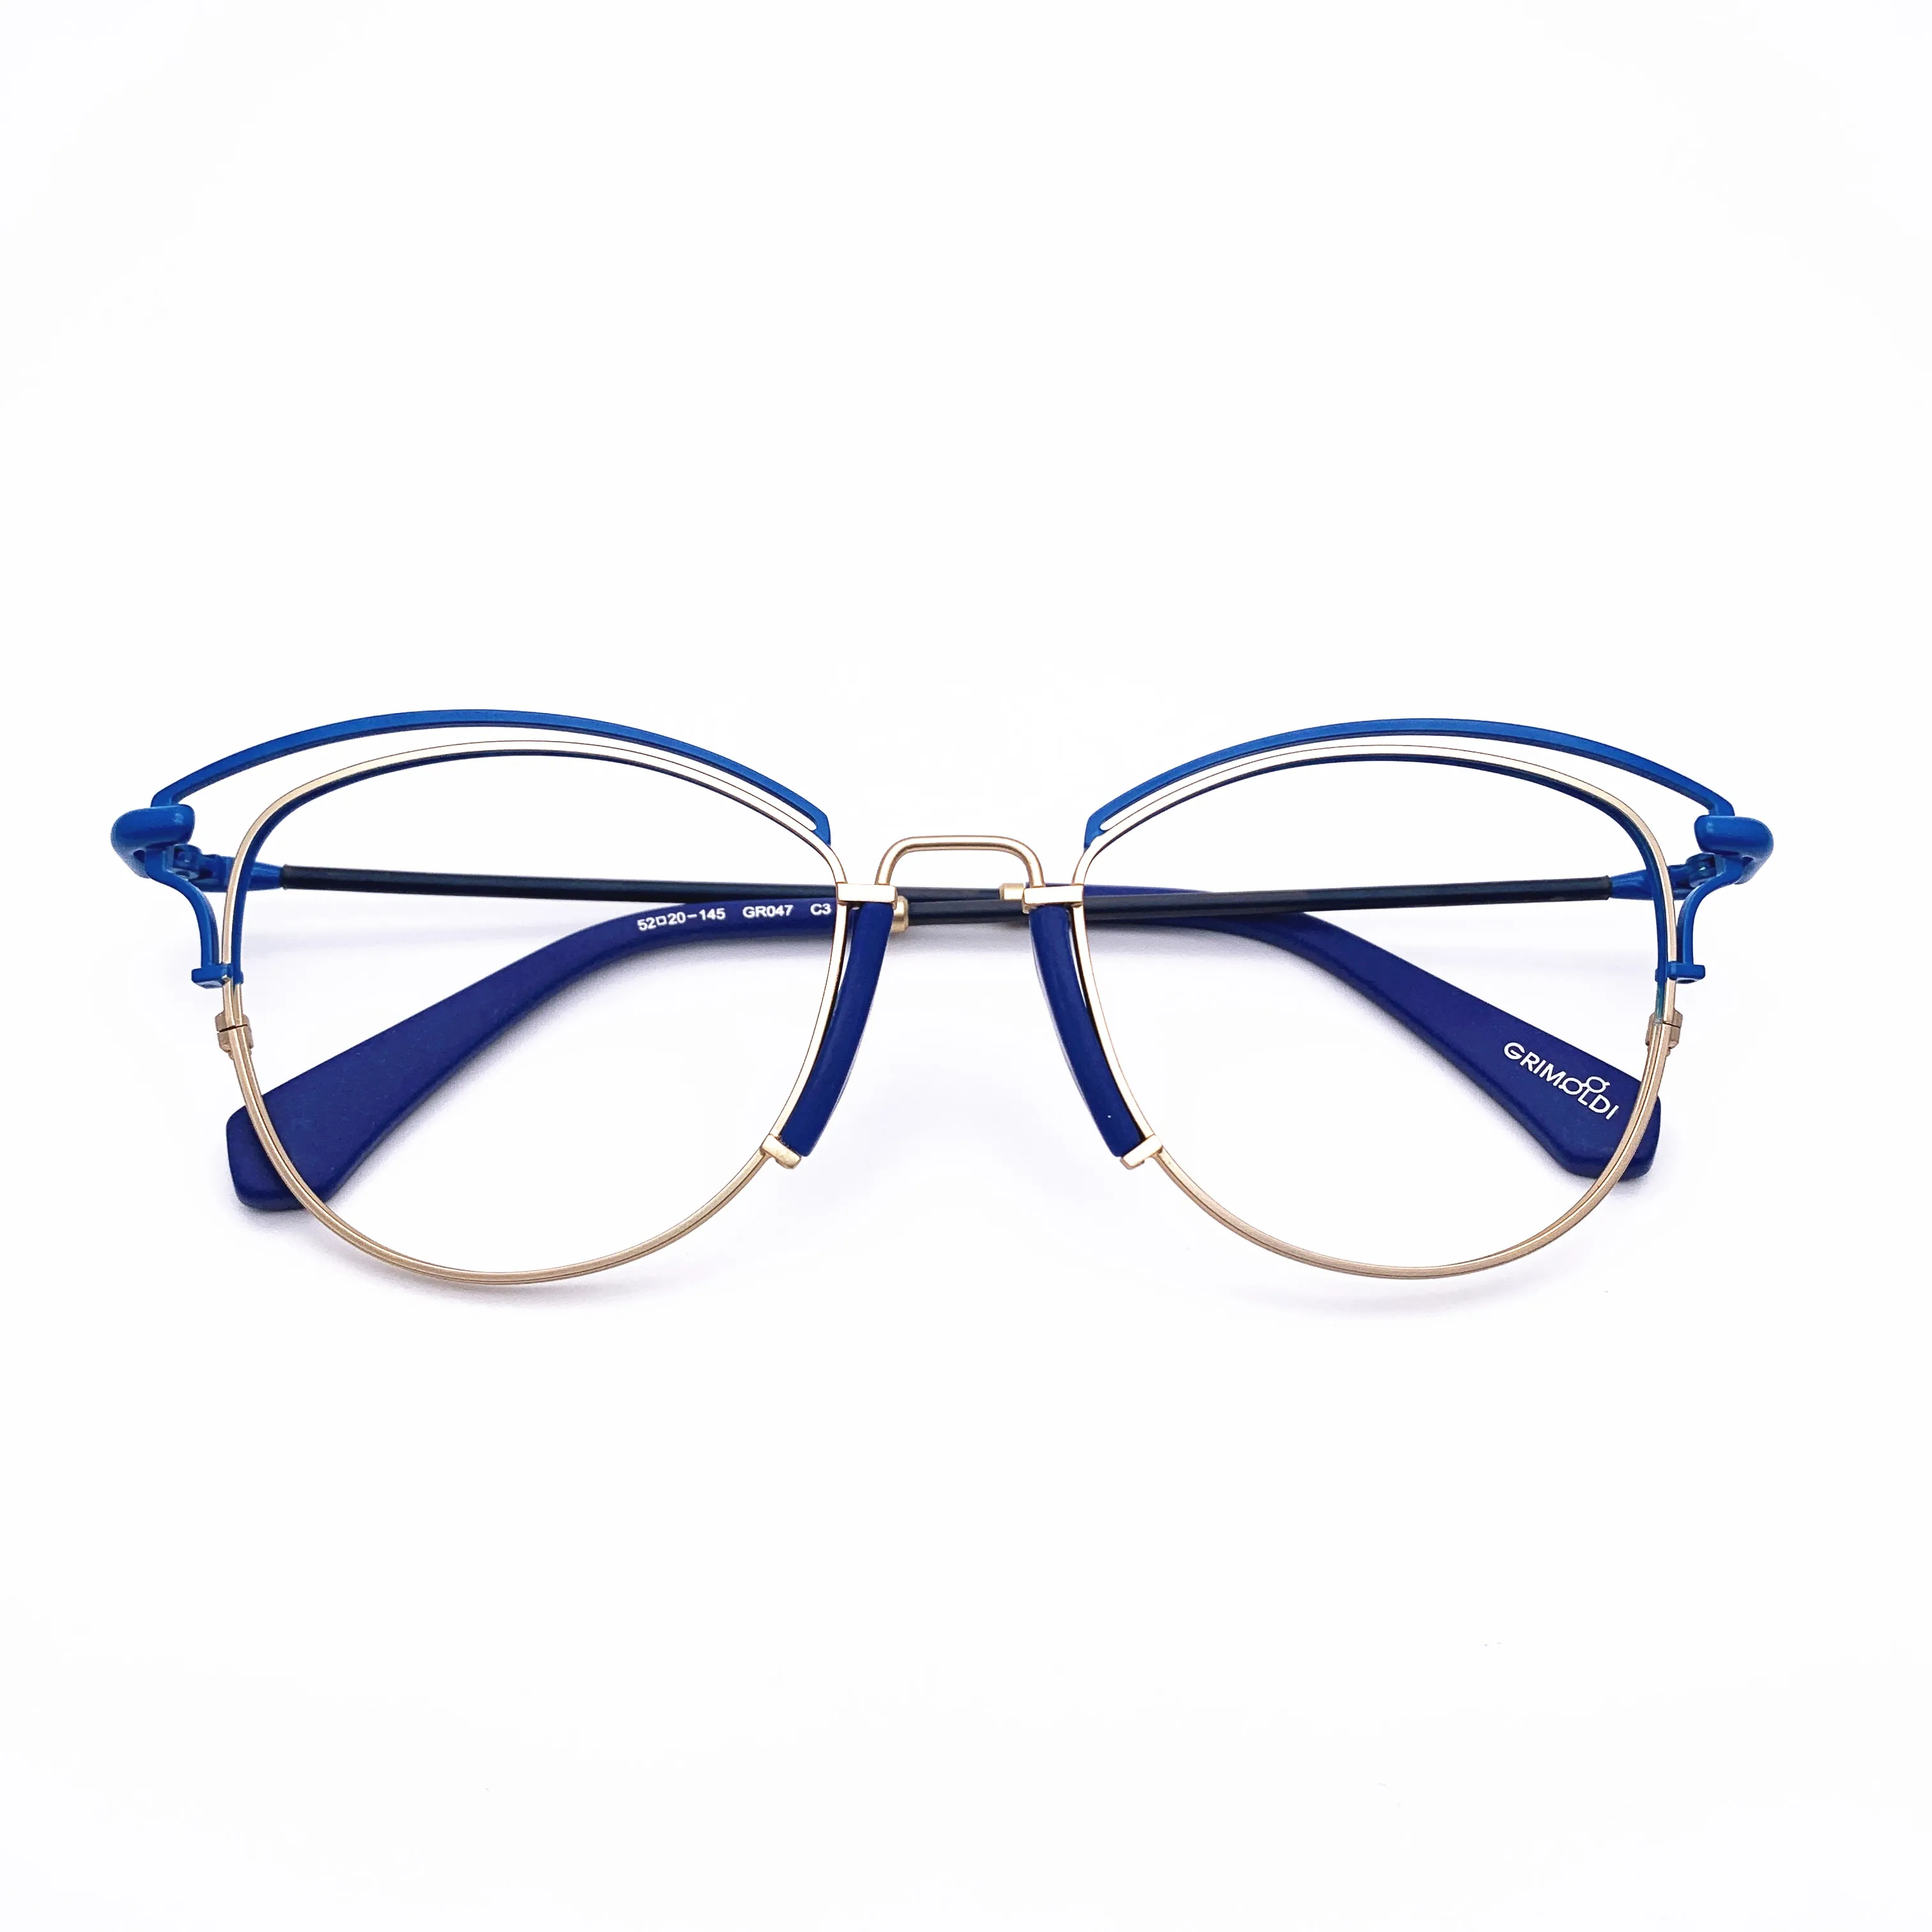 Belight Optical New Arrival Two-Dimensional Design Metal Glasses Cat Eye Prescription Eyeglasses Retro Frame Eyewear GR047